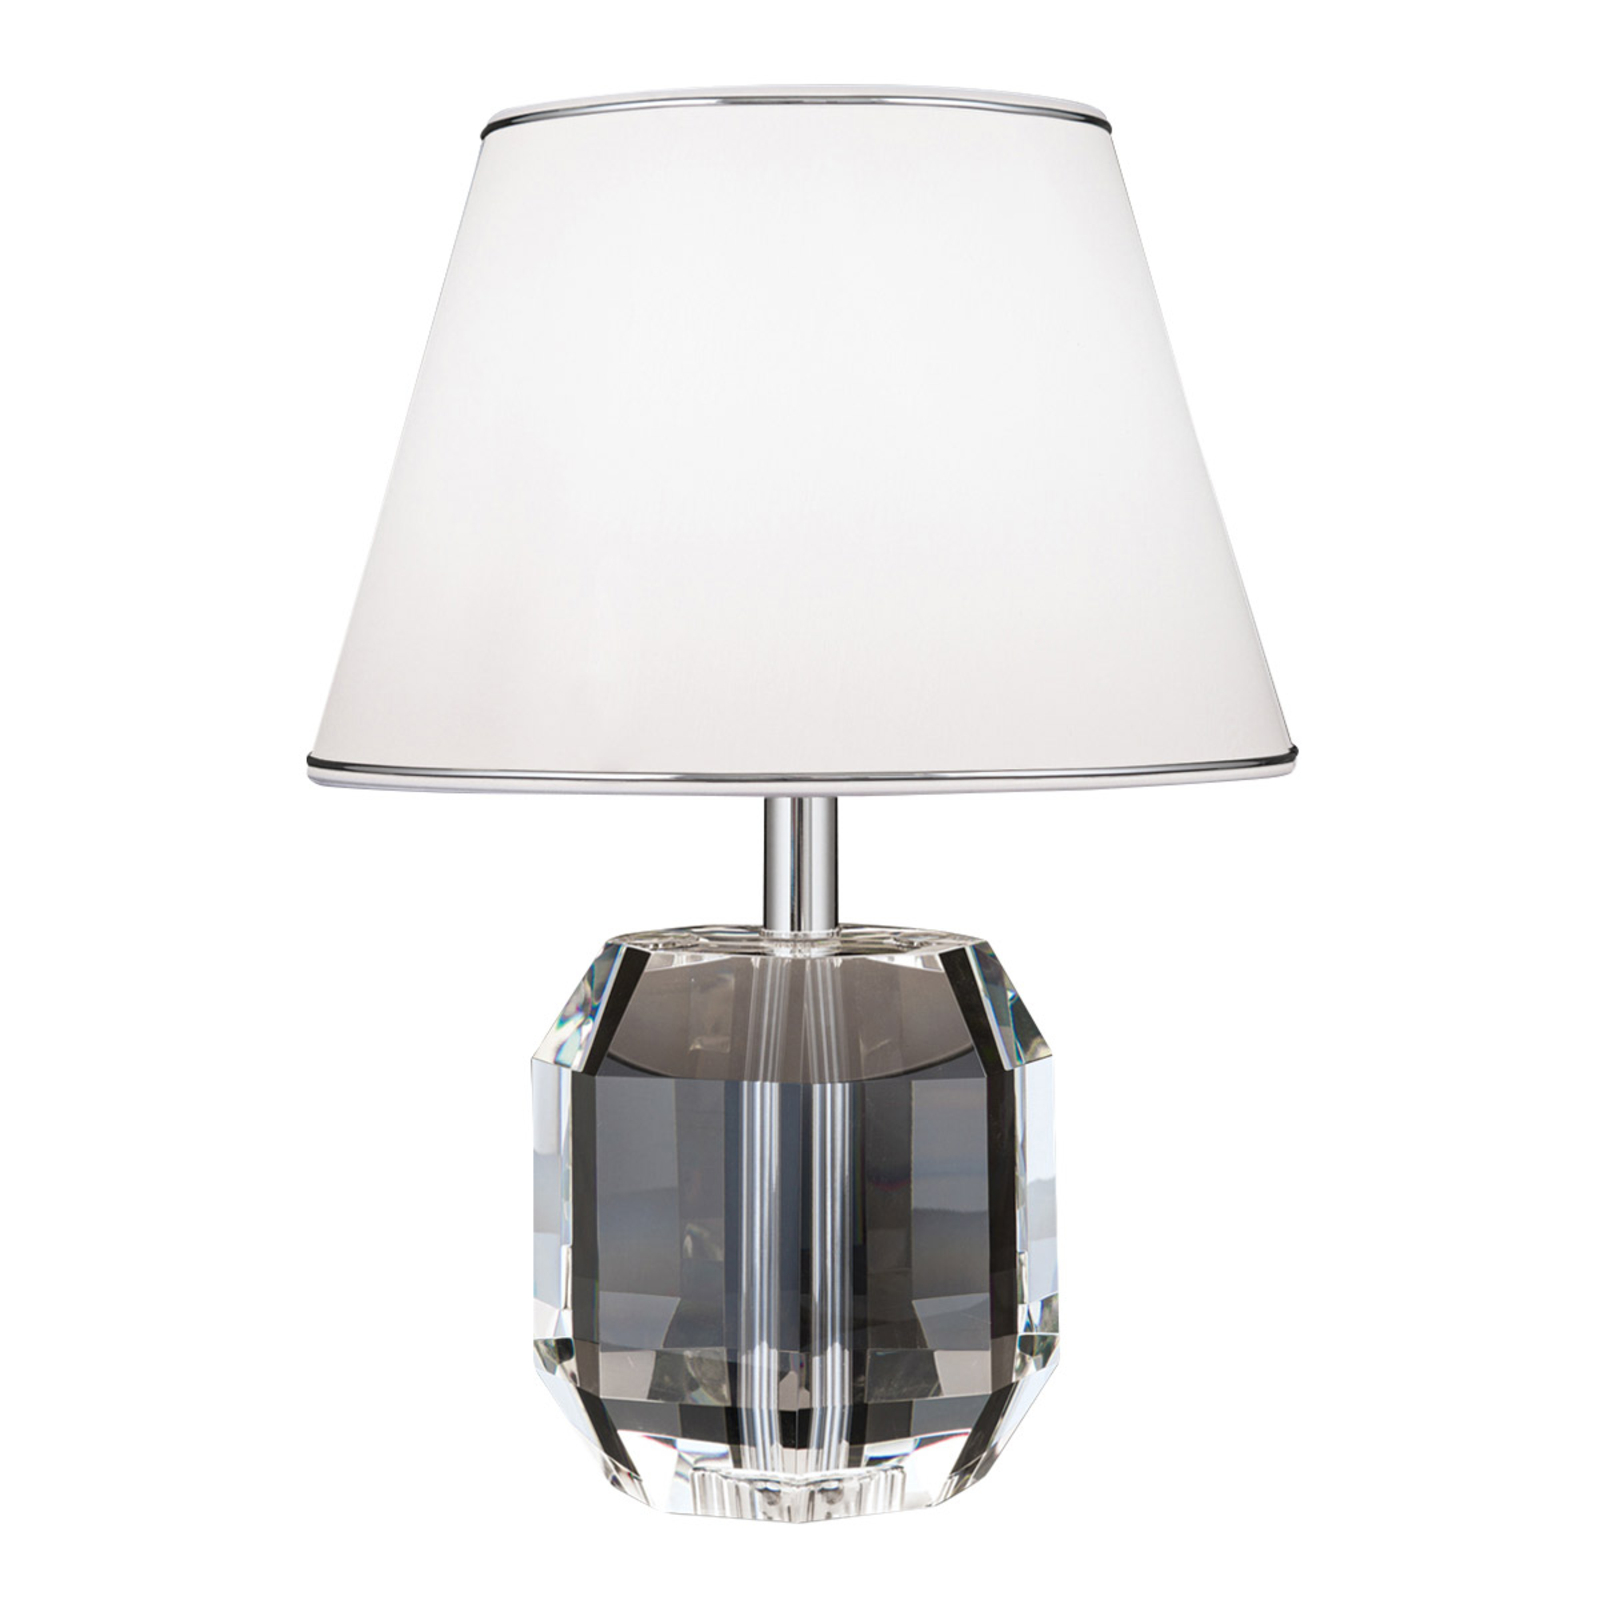 Alexis crystal table lamp, chrome/white